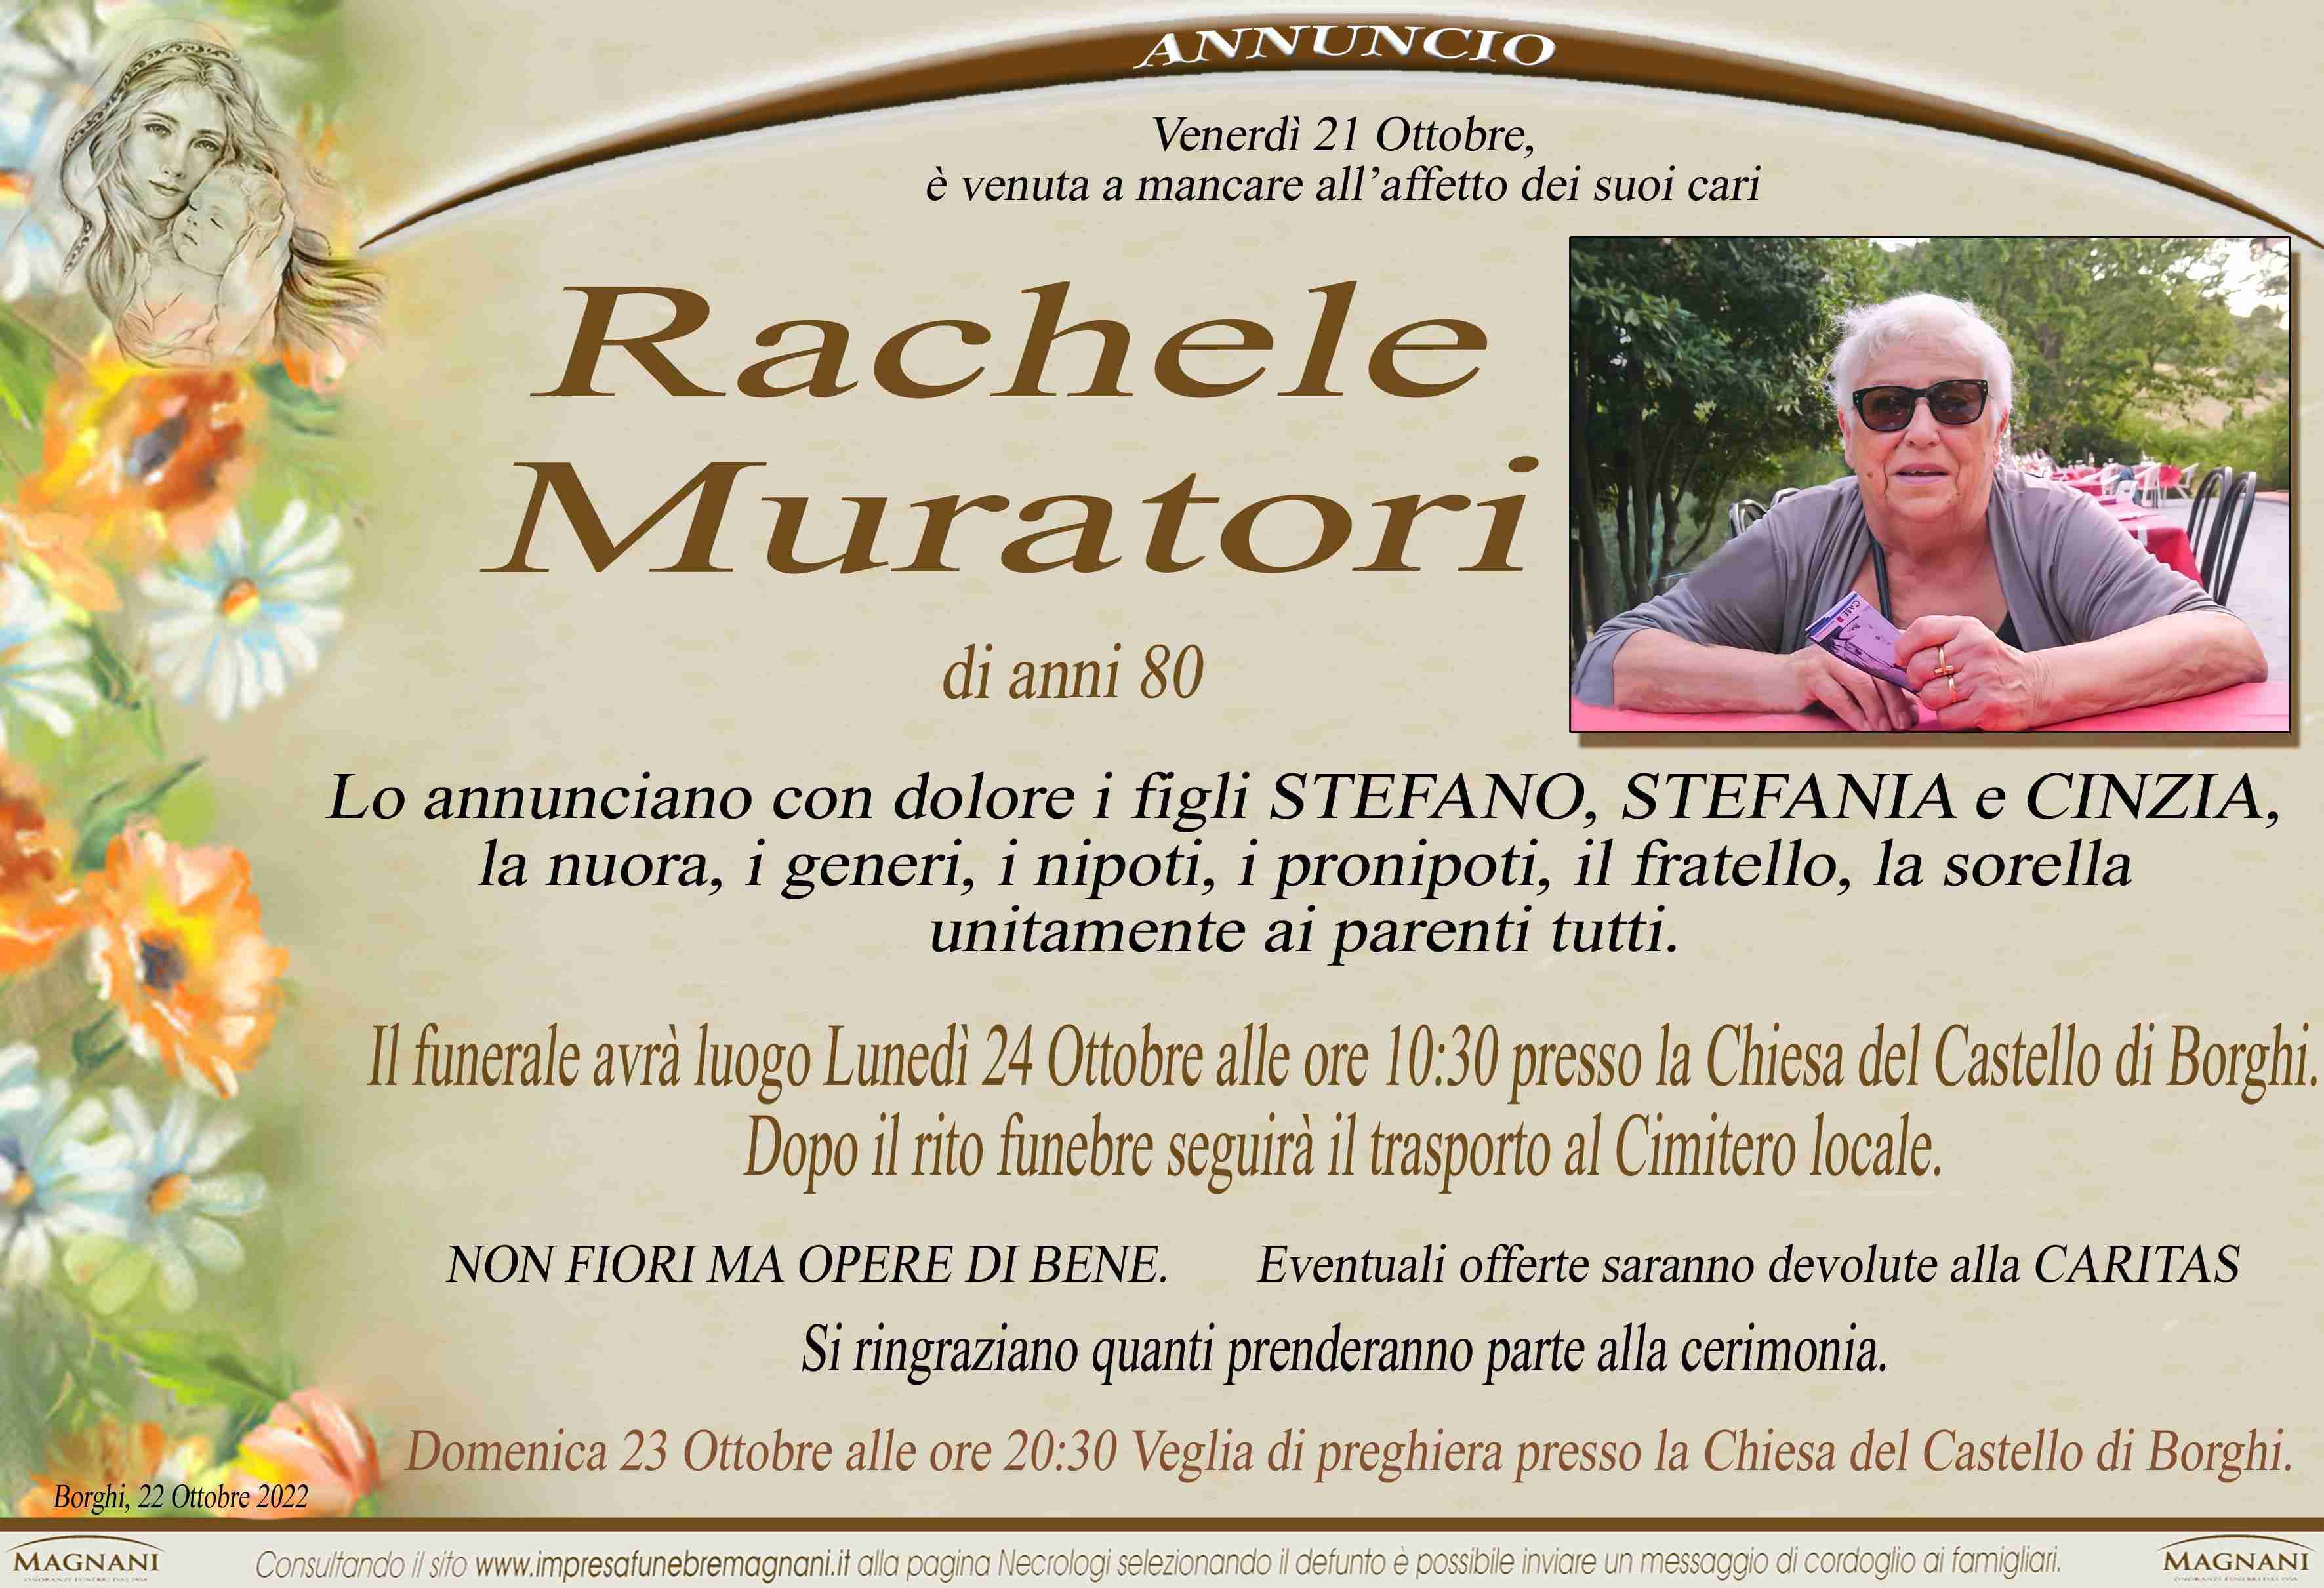 Rachele Muratori